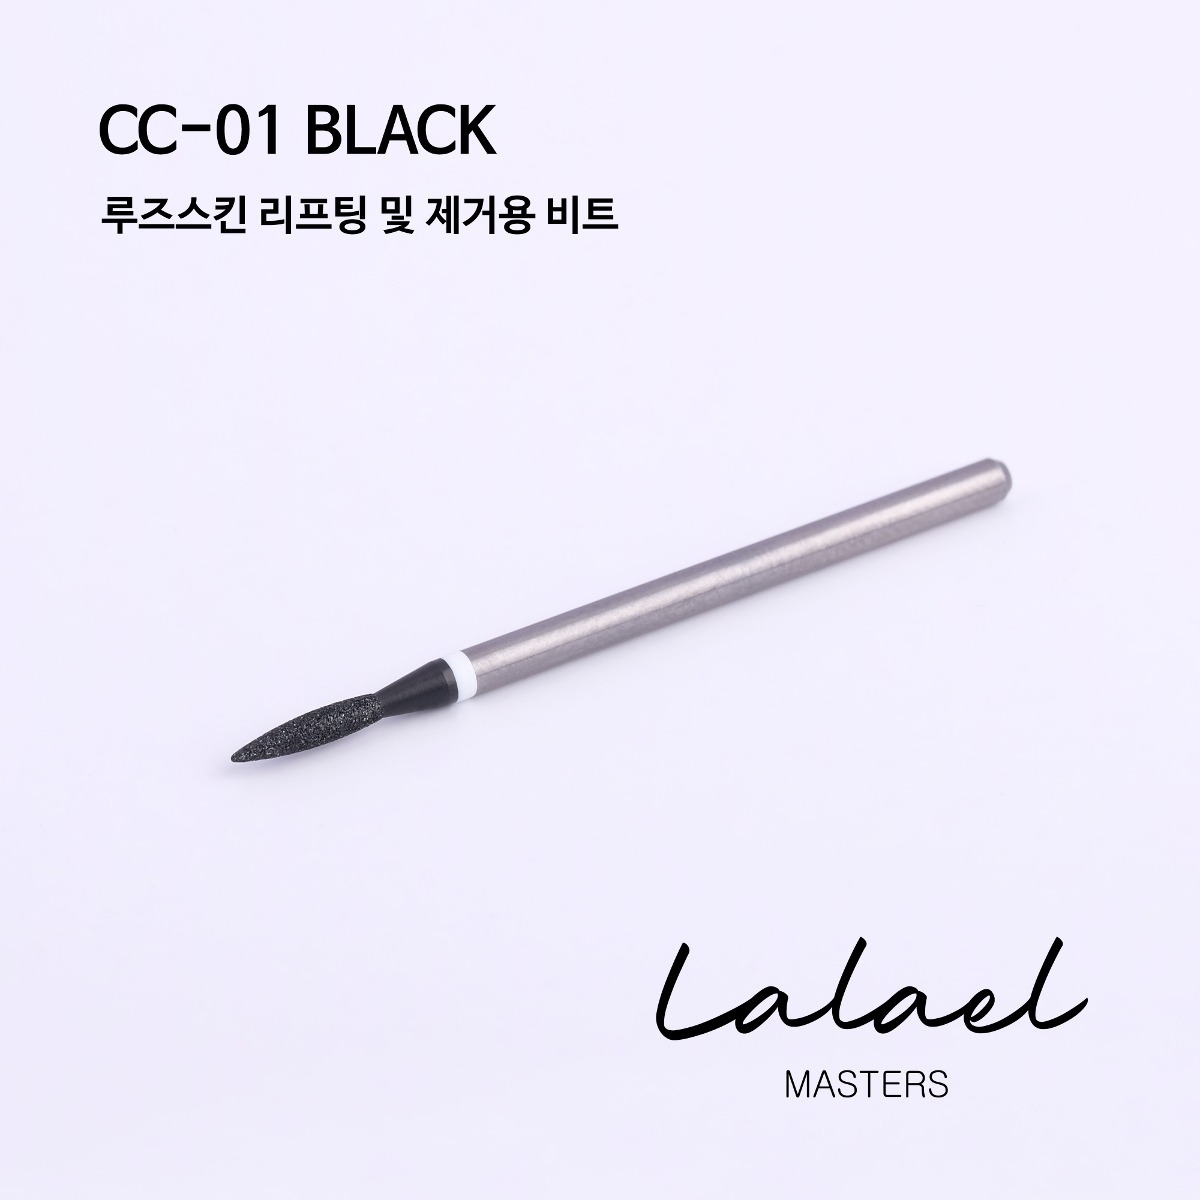 CC-01 BLACK